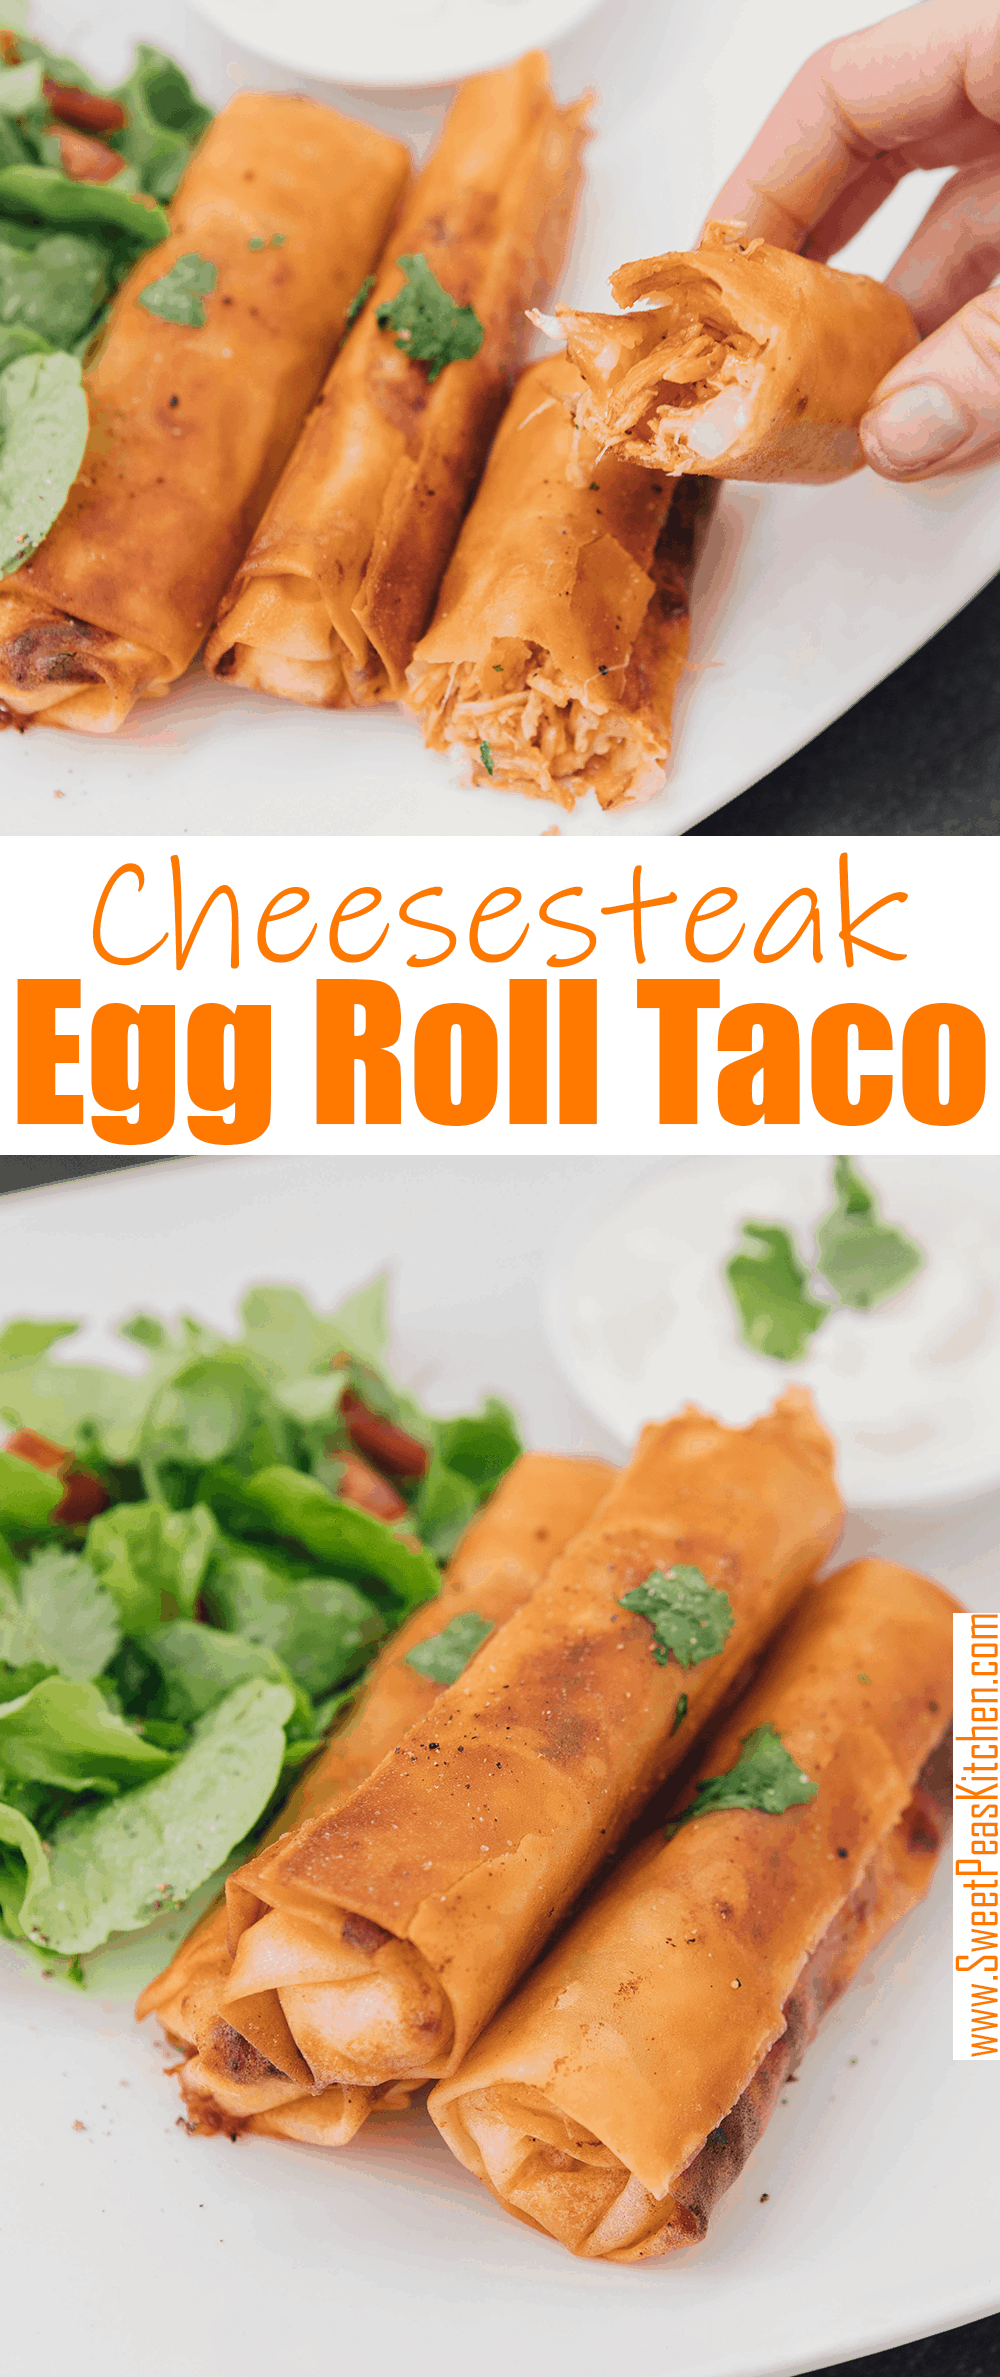 Cheesesteak Egg Roll Taco